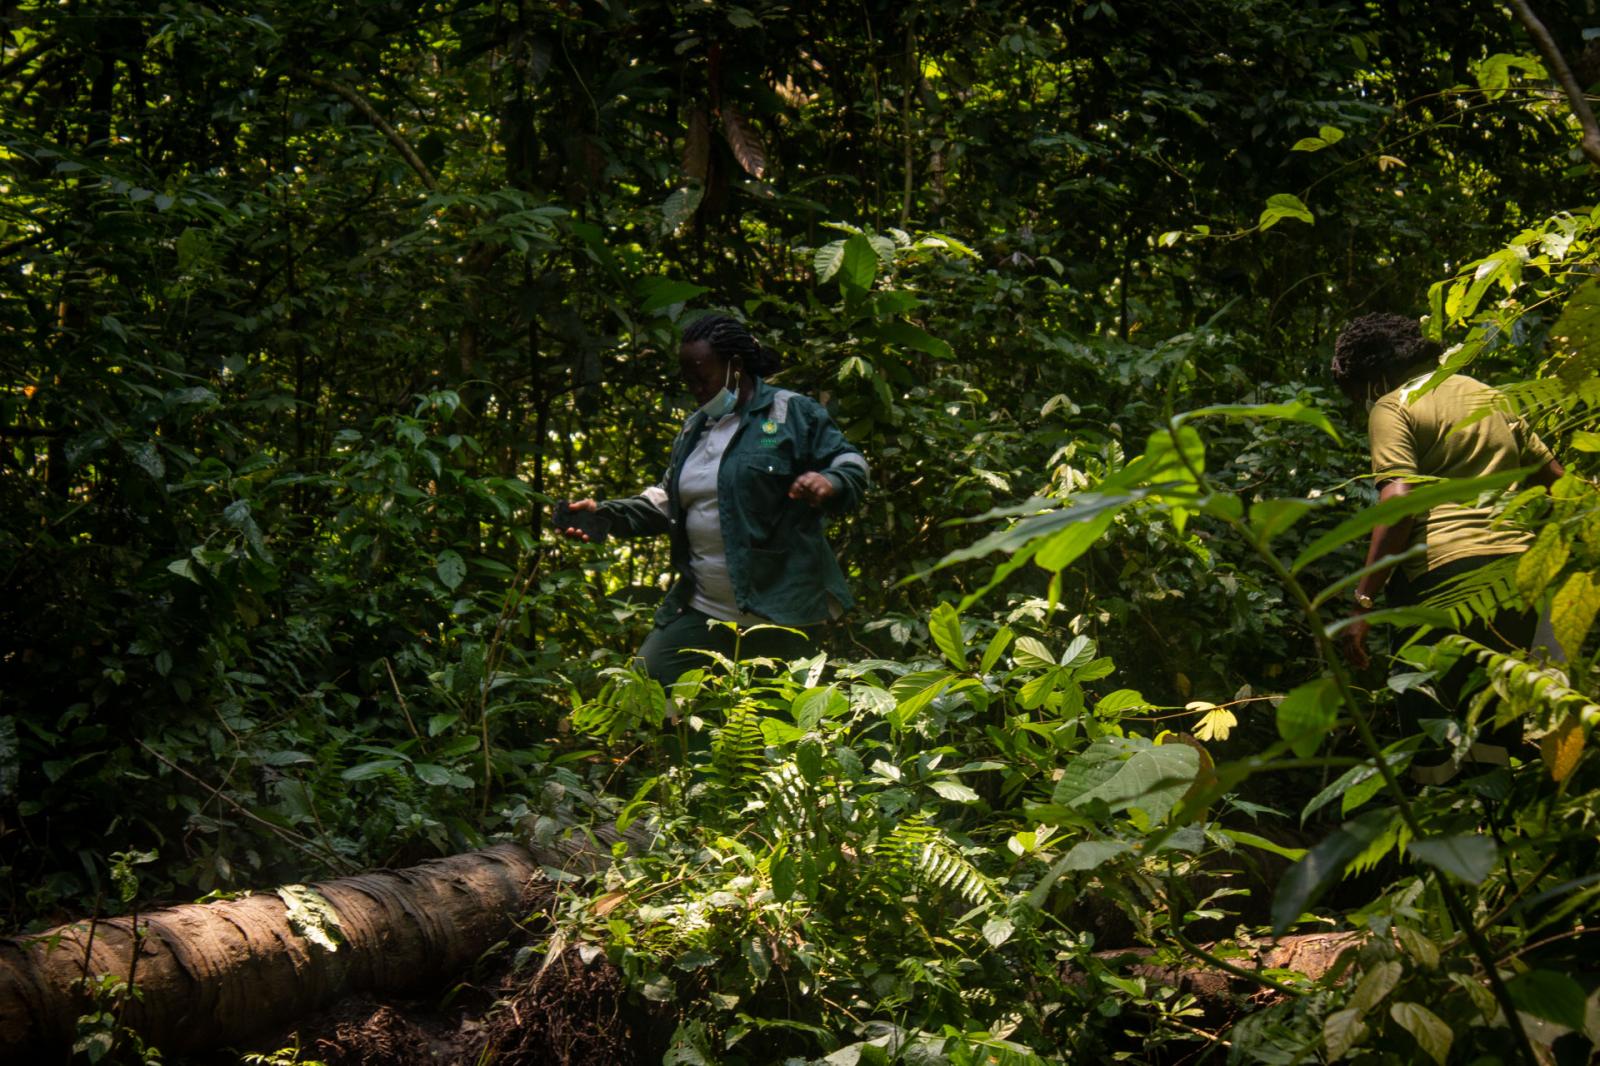 Justine, who works in Uganda Wildlife Authority, crosses over a rudimentary log bridge.